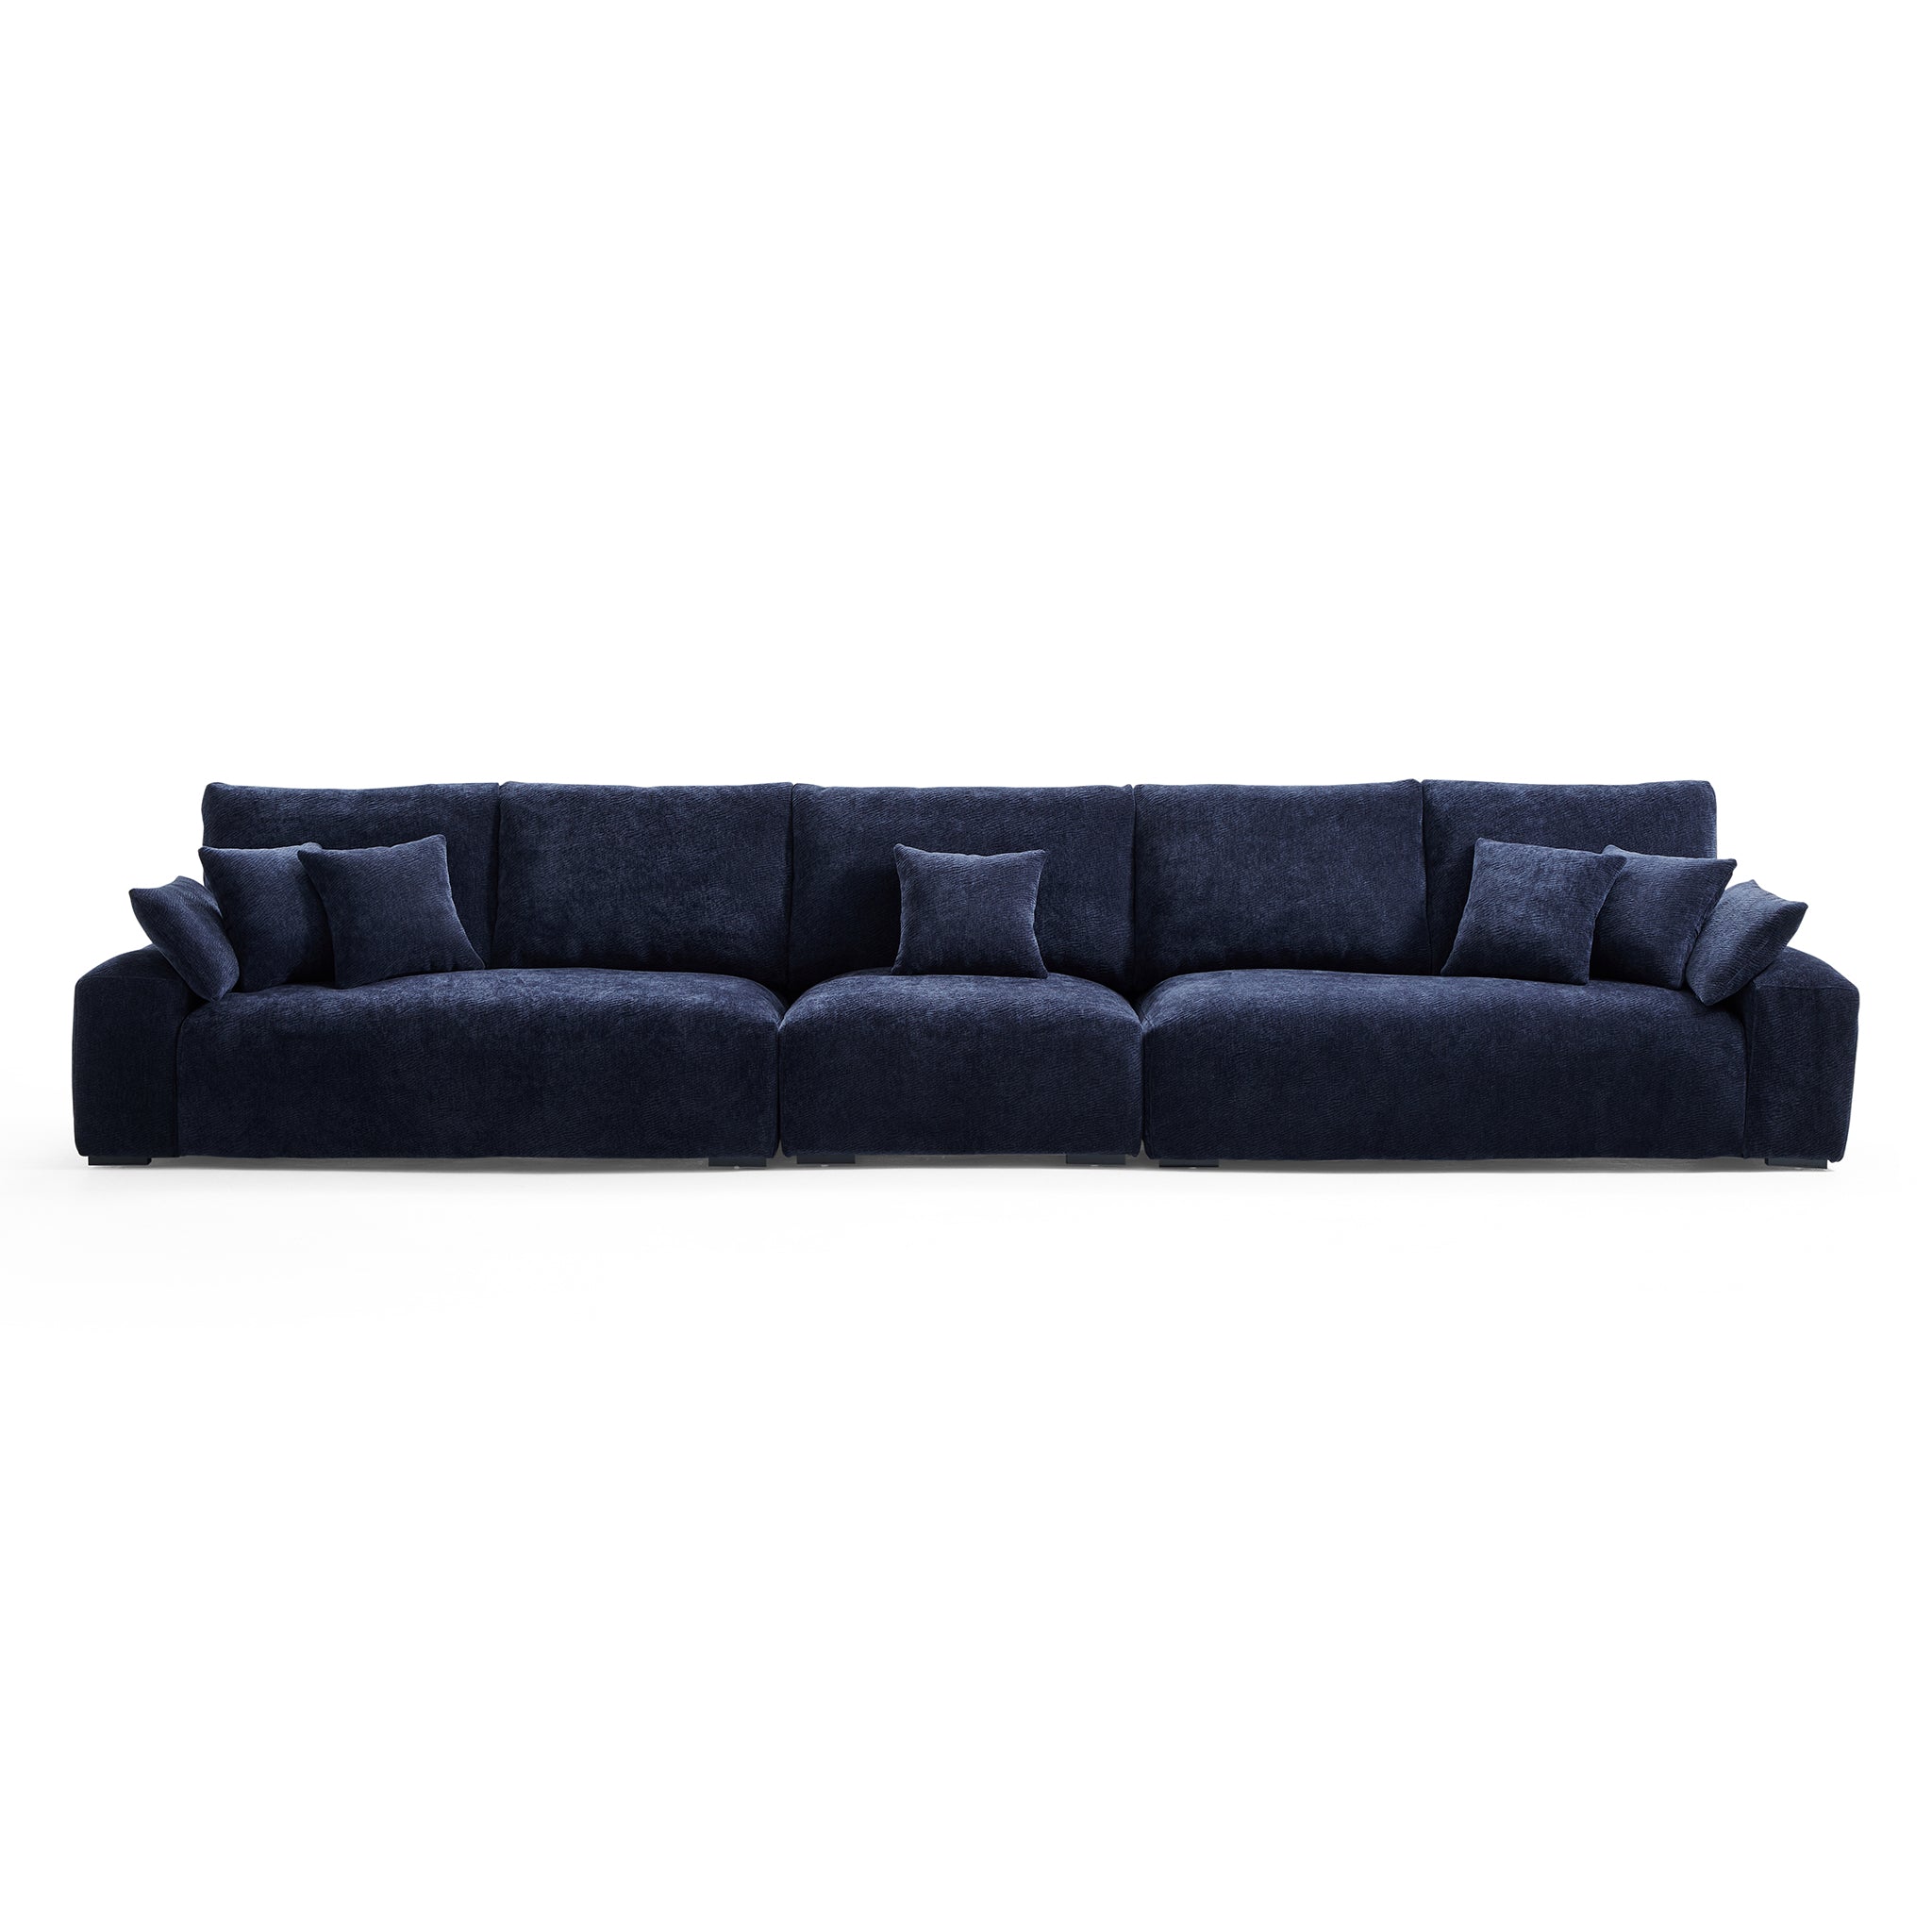 The Empress Navy Blue Sofa